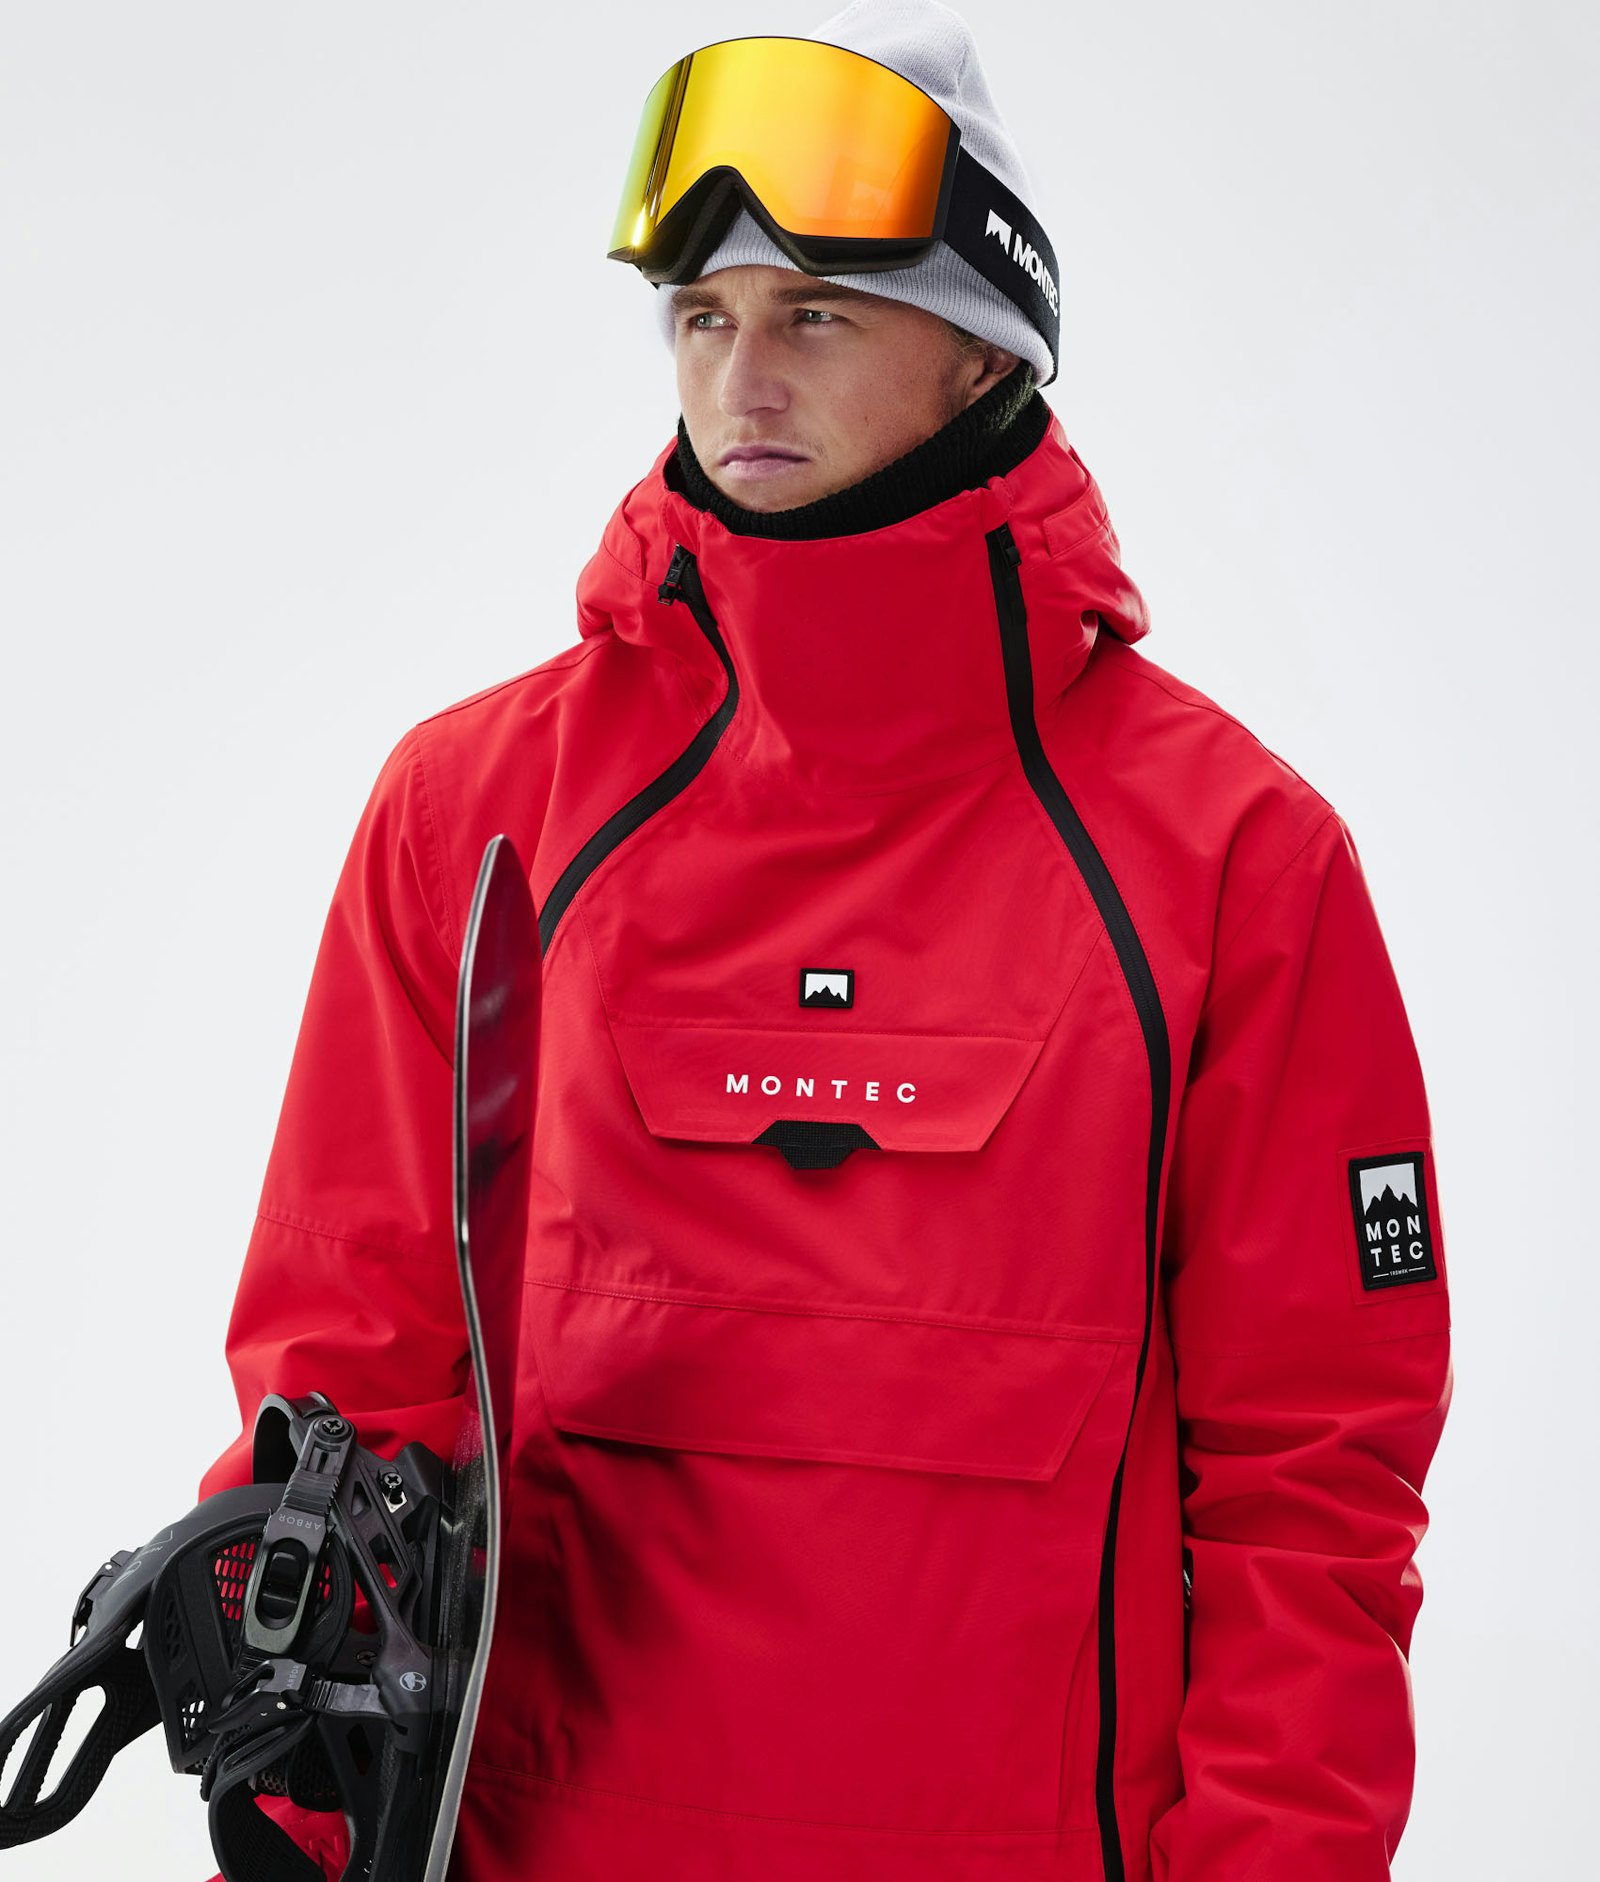 Doom 2021 Veste Snowboard Homme Red